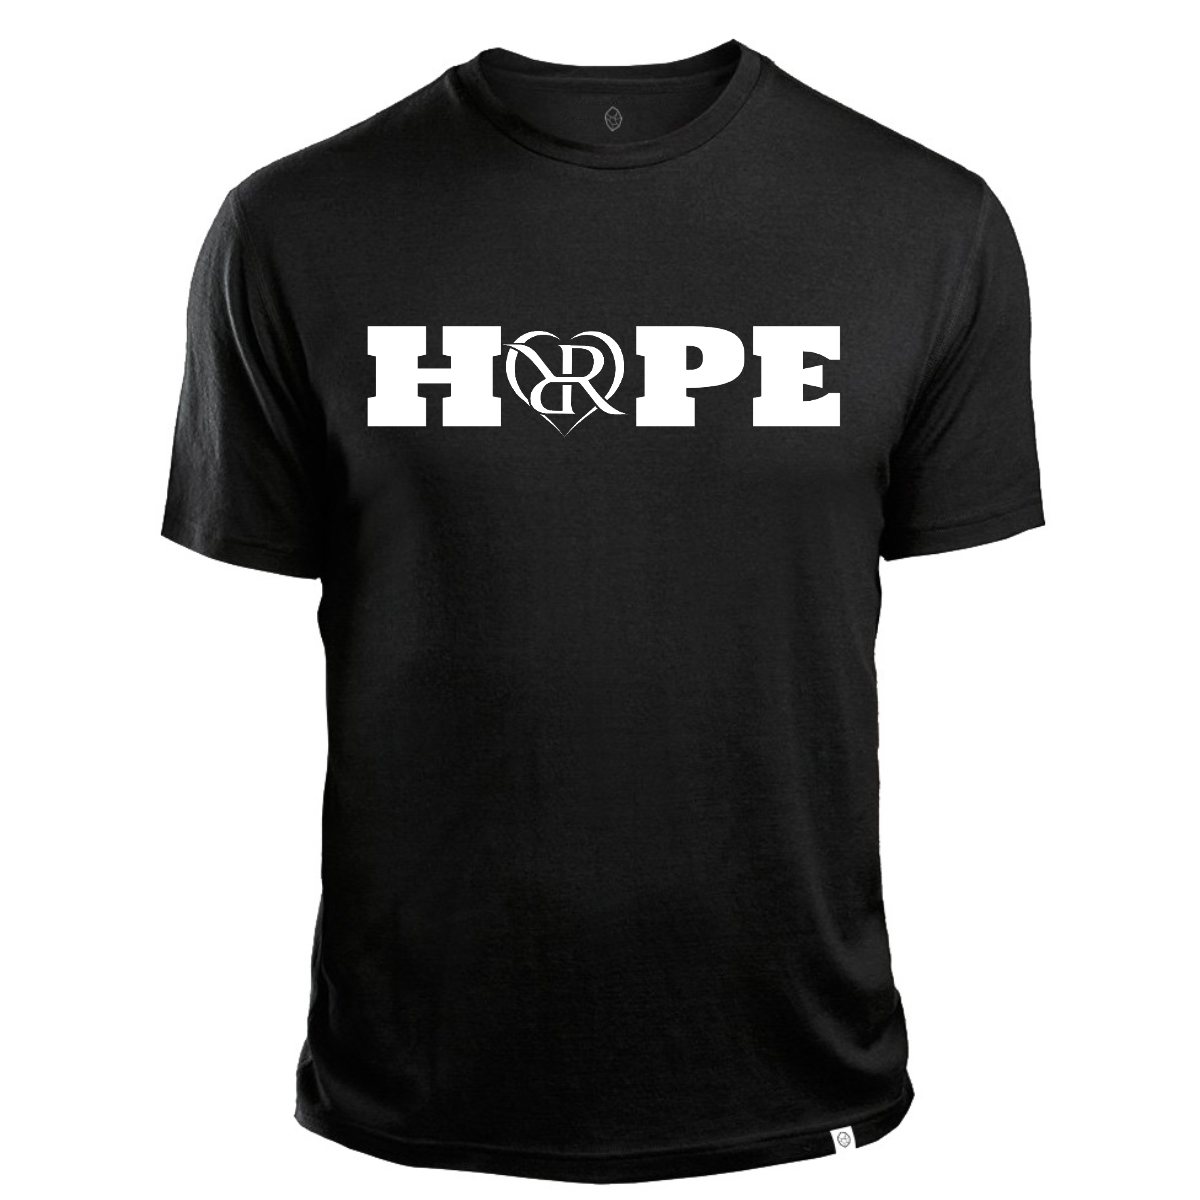 The "Hope" T-shirt